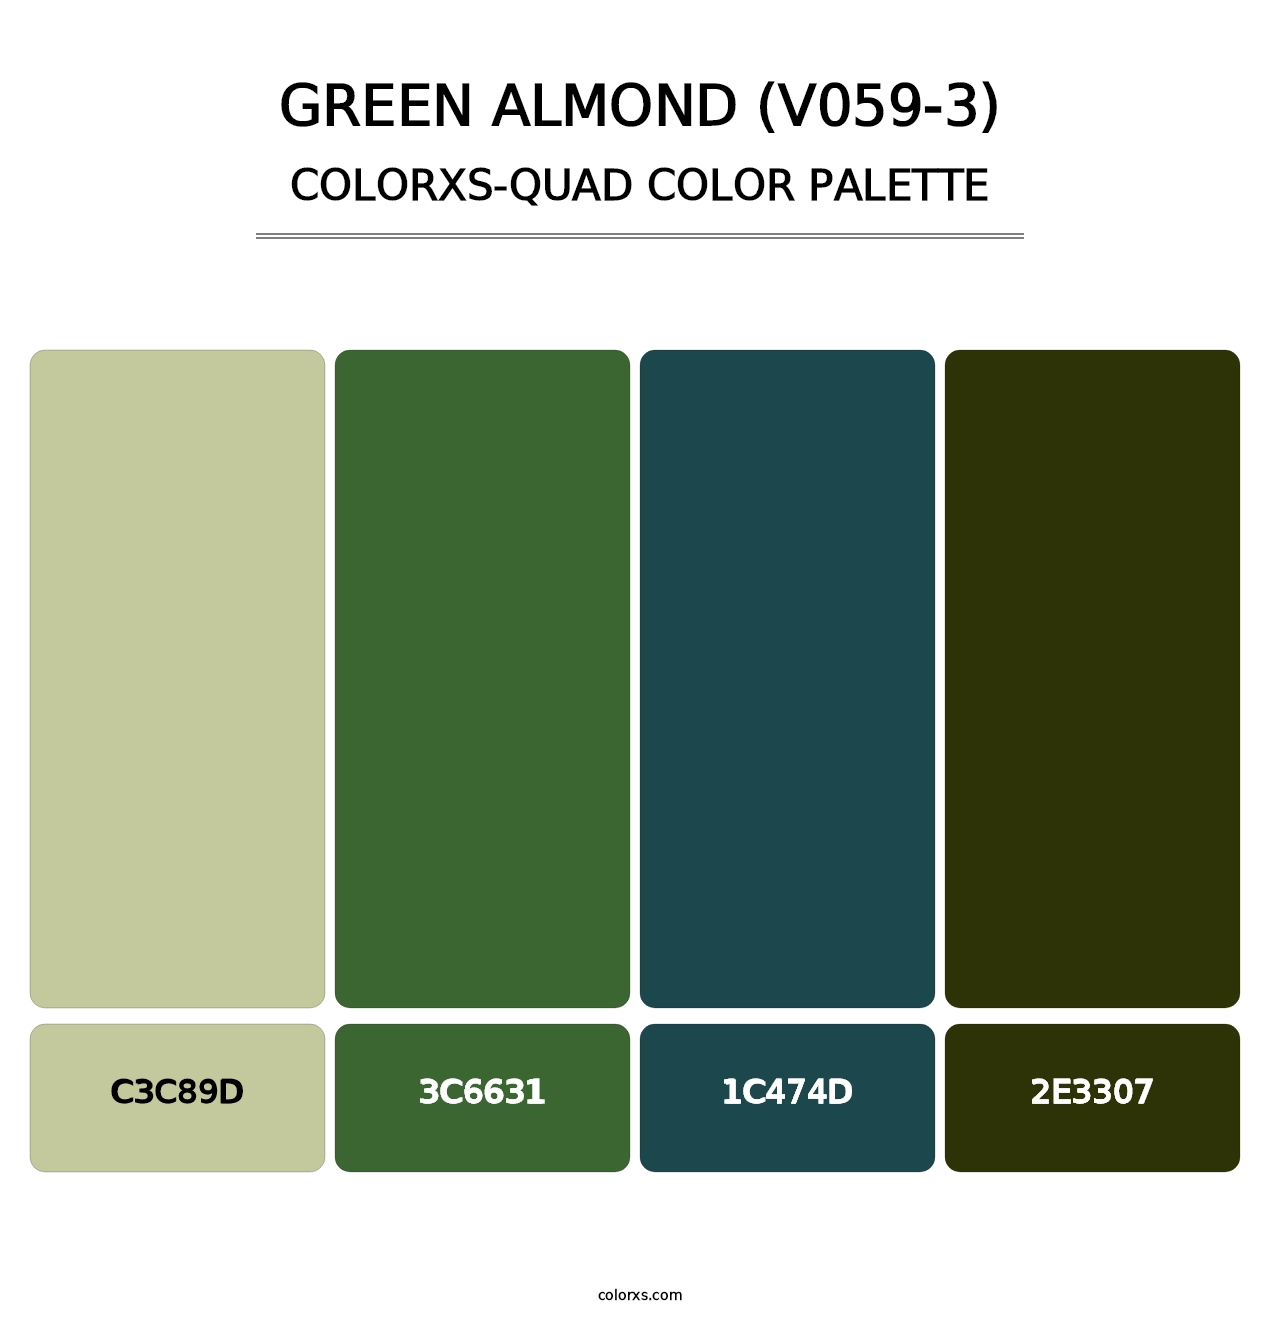 Green Almond (V059-3) - Colorxs Quad Palette